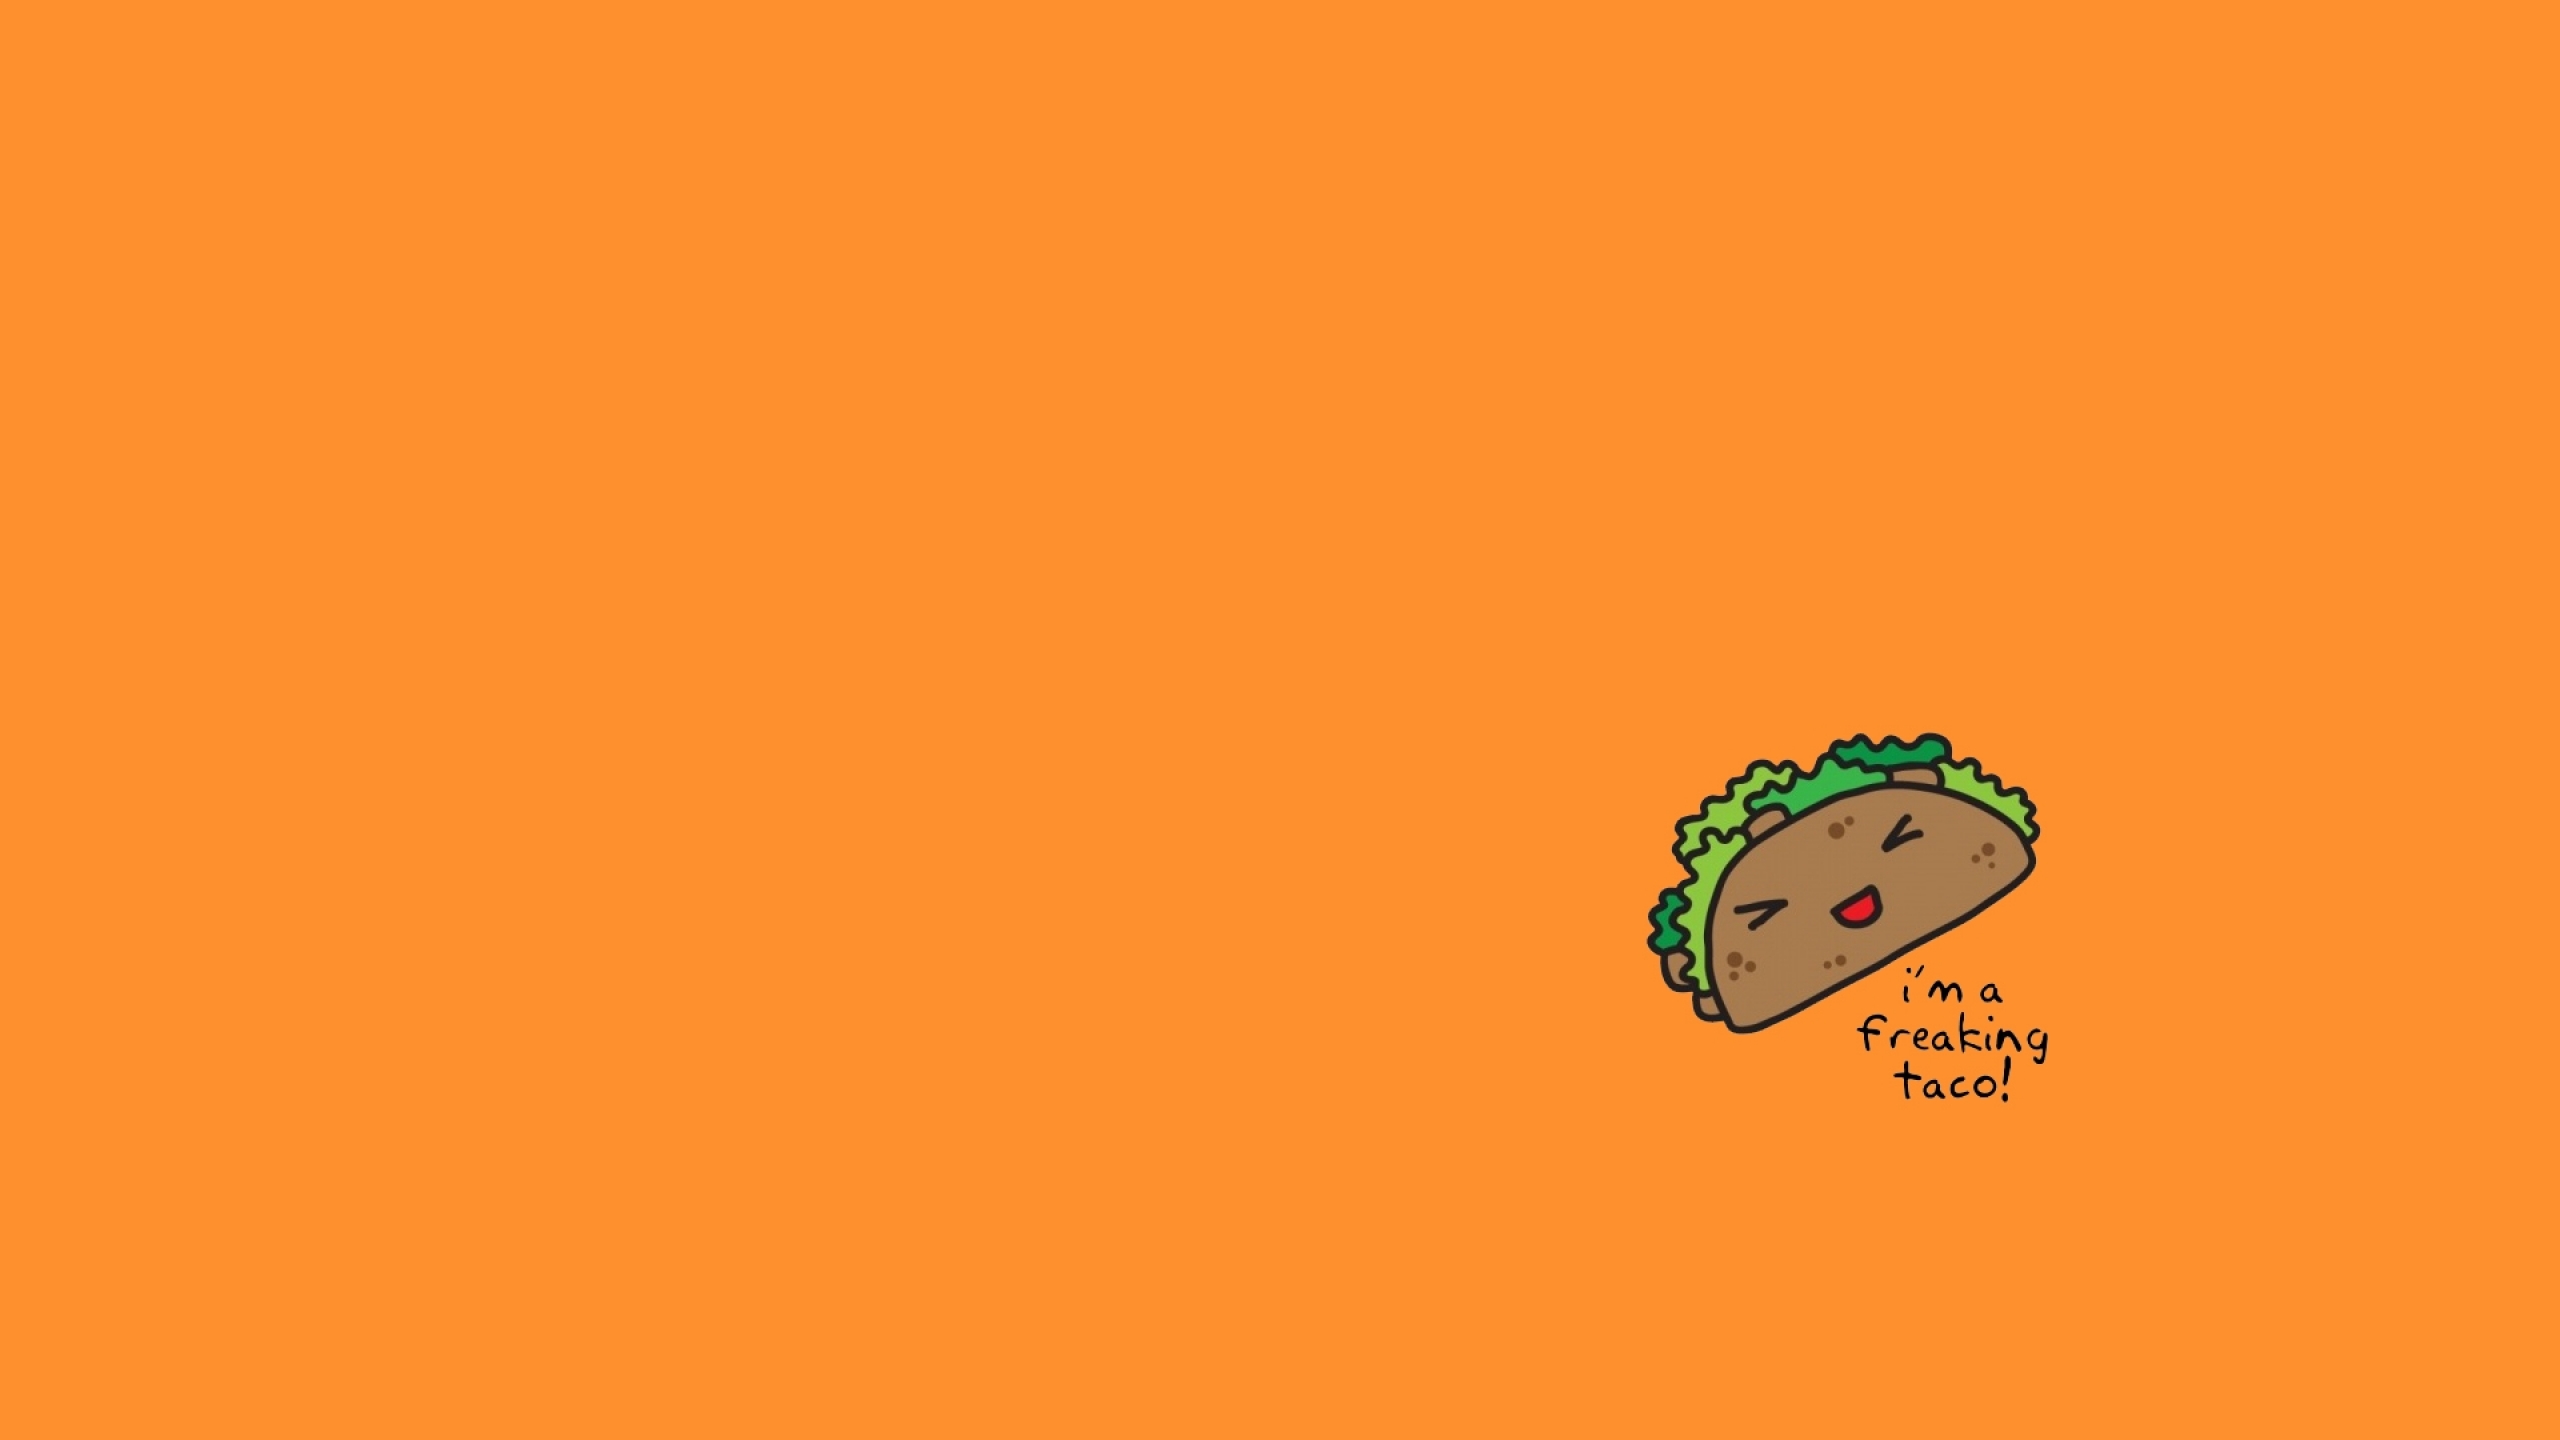 Download Wallpapers, Download 2560x1440 orange food tacos